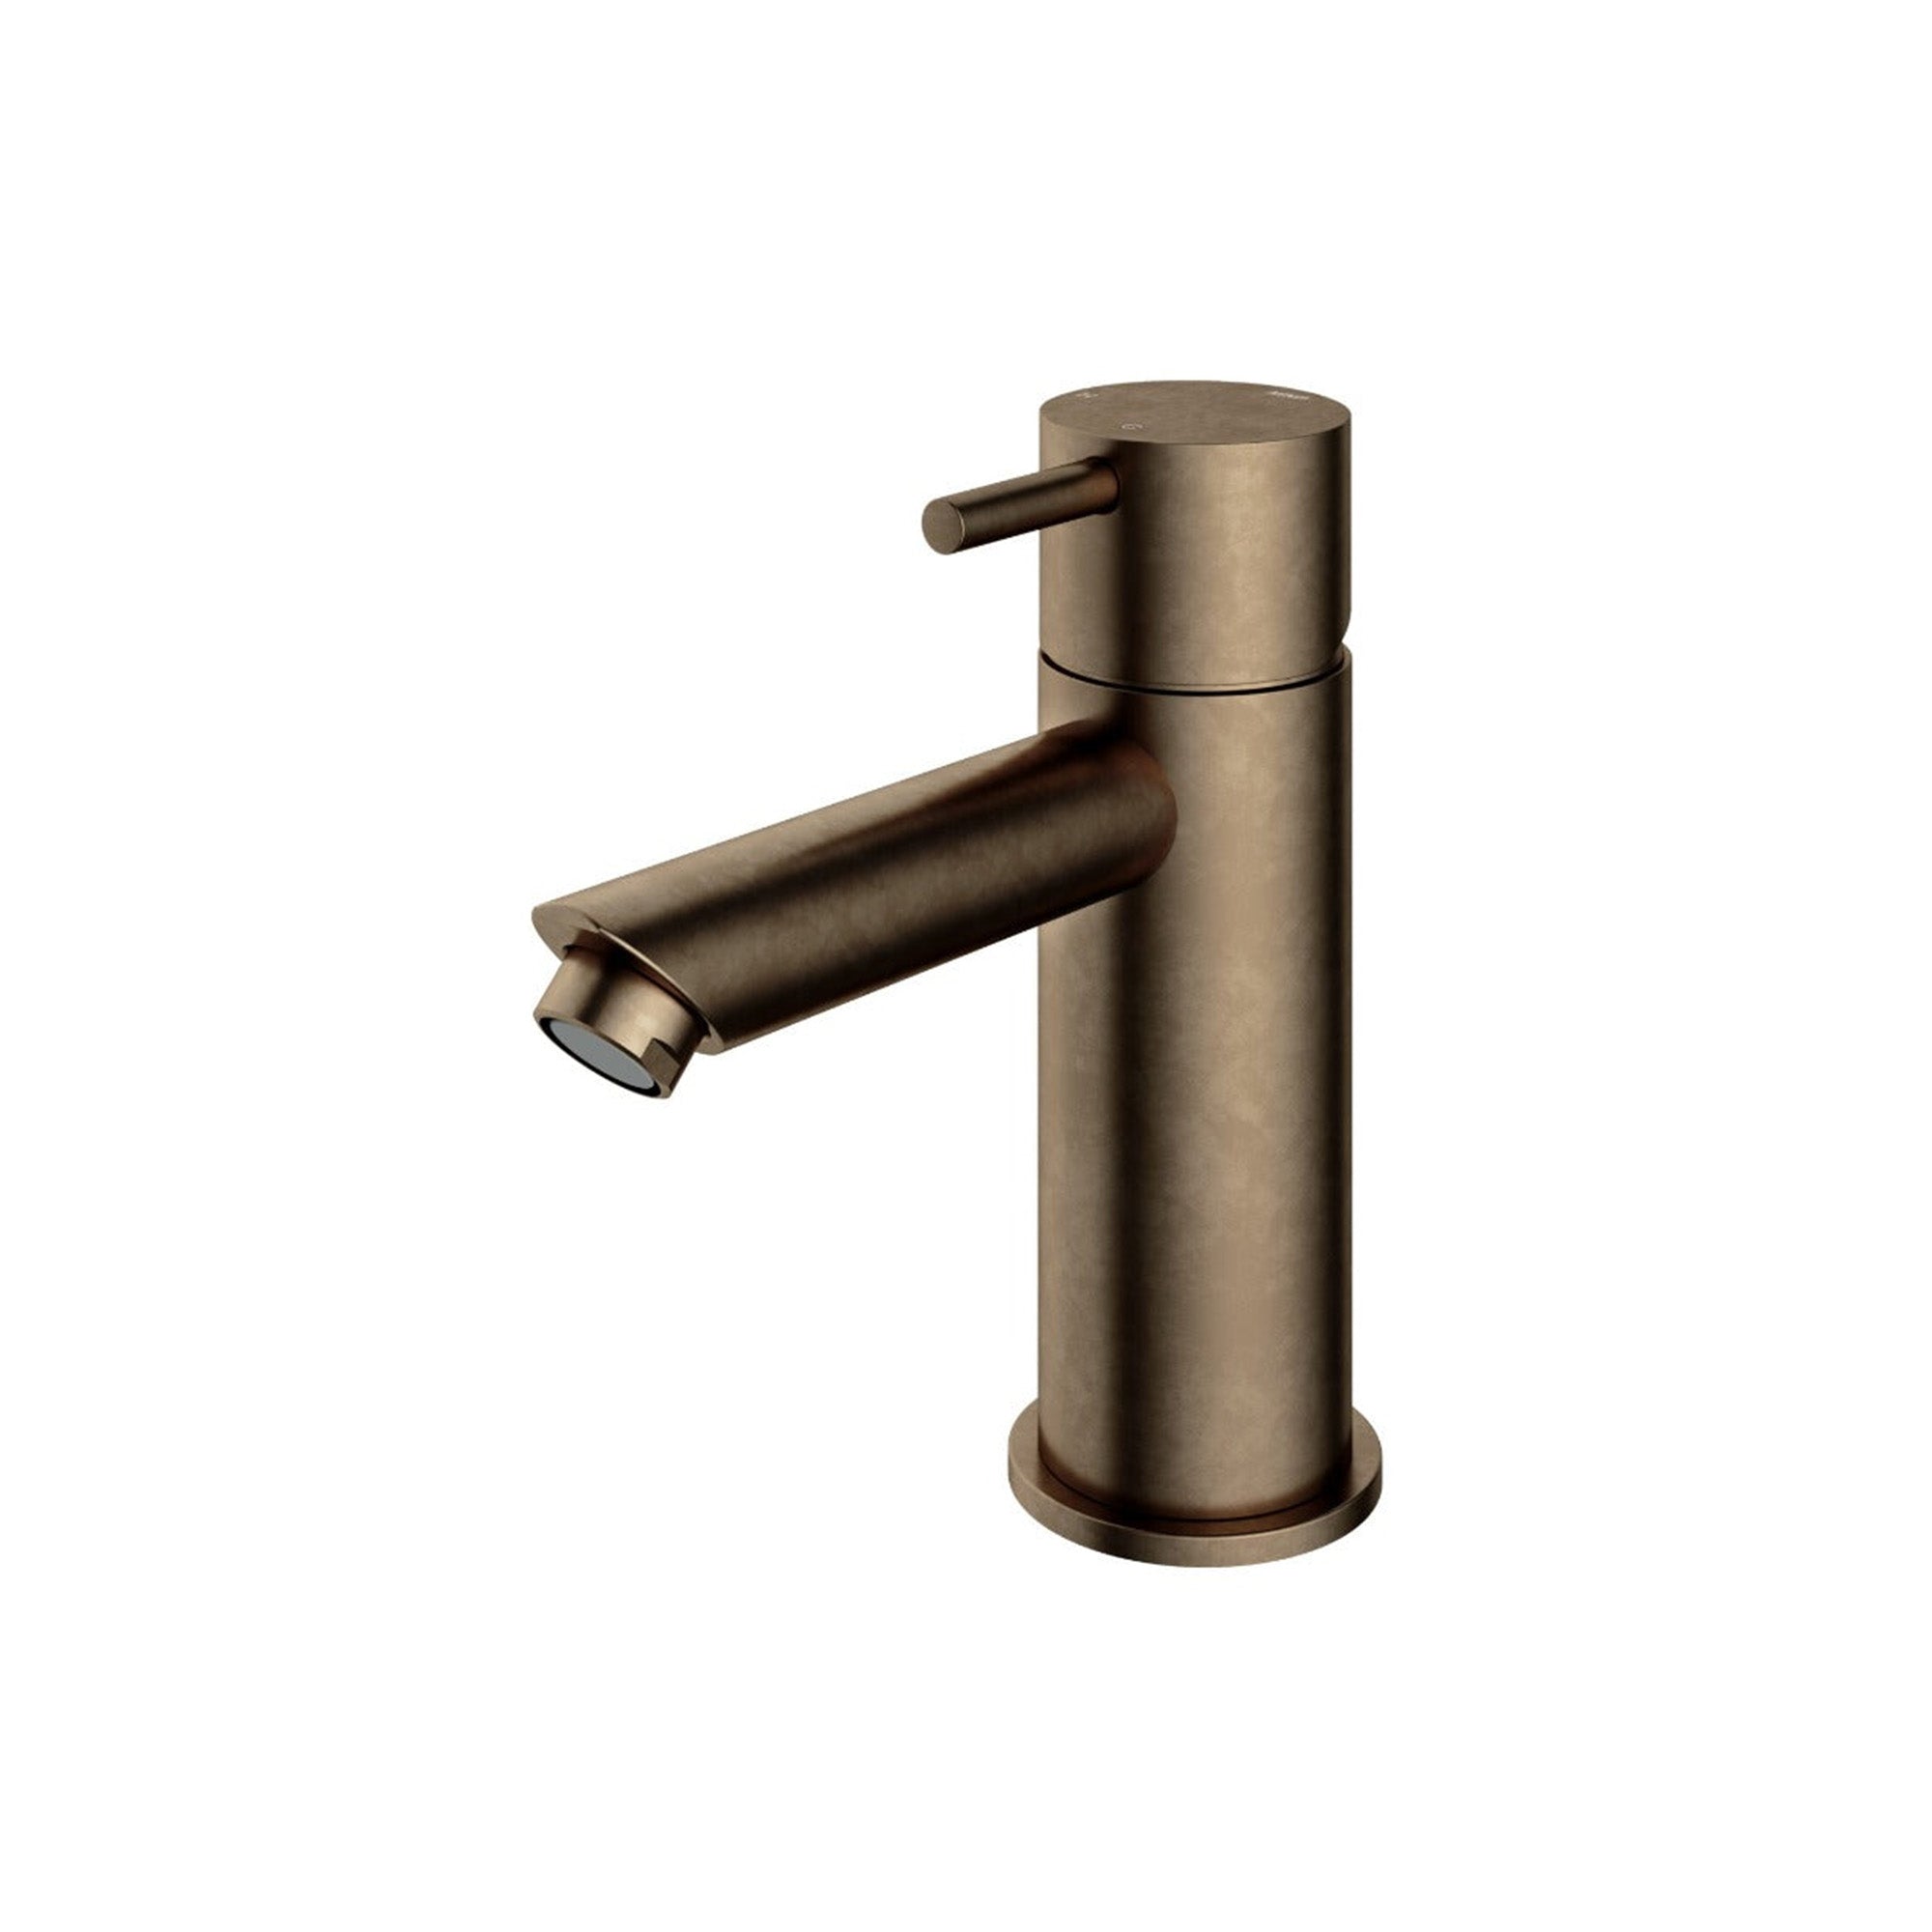 cobber basin mixer tap monobloc straight spout aged brass